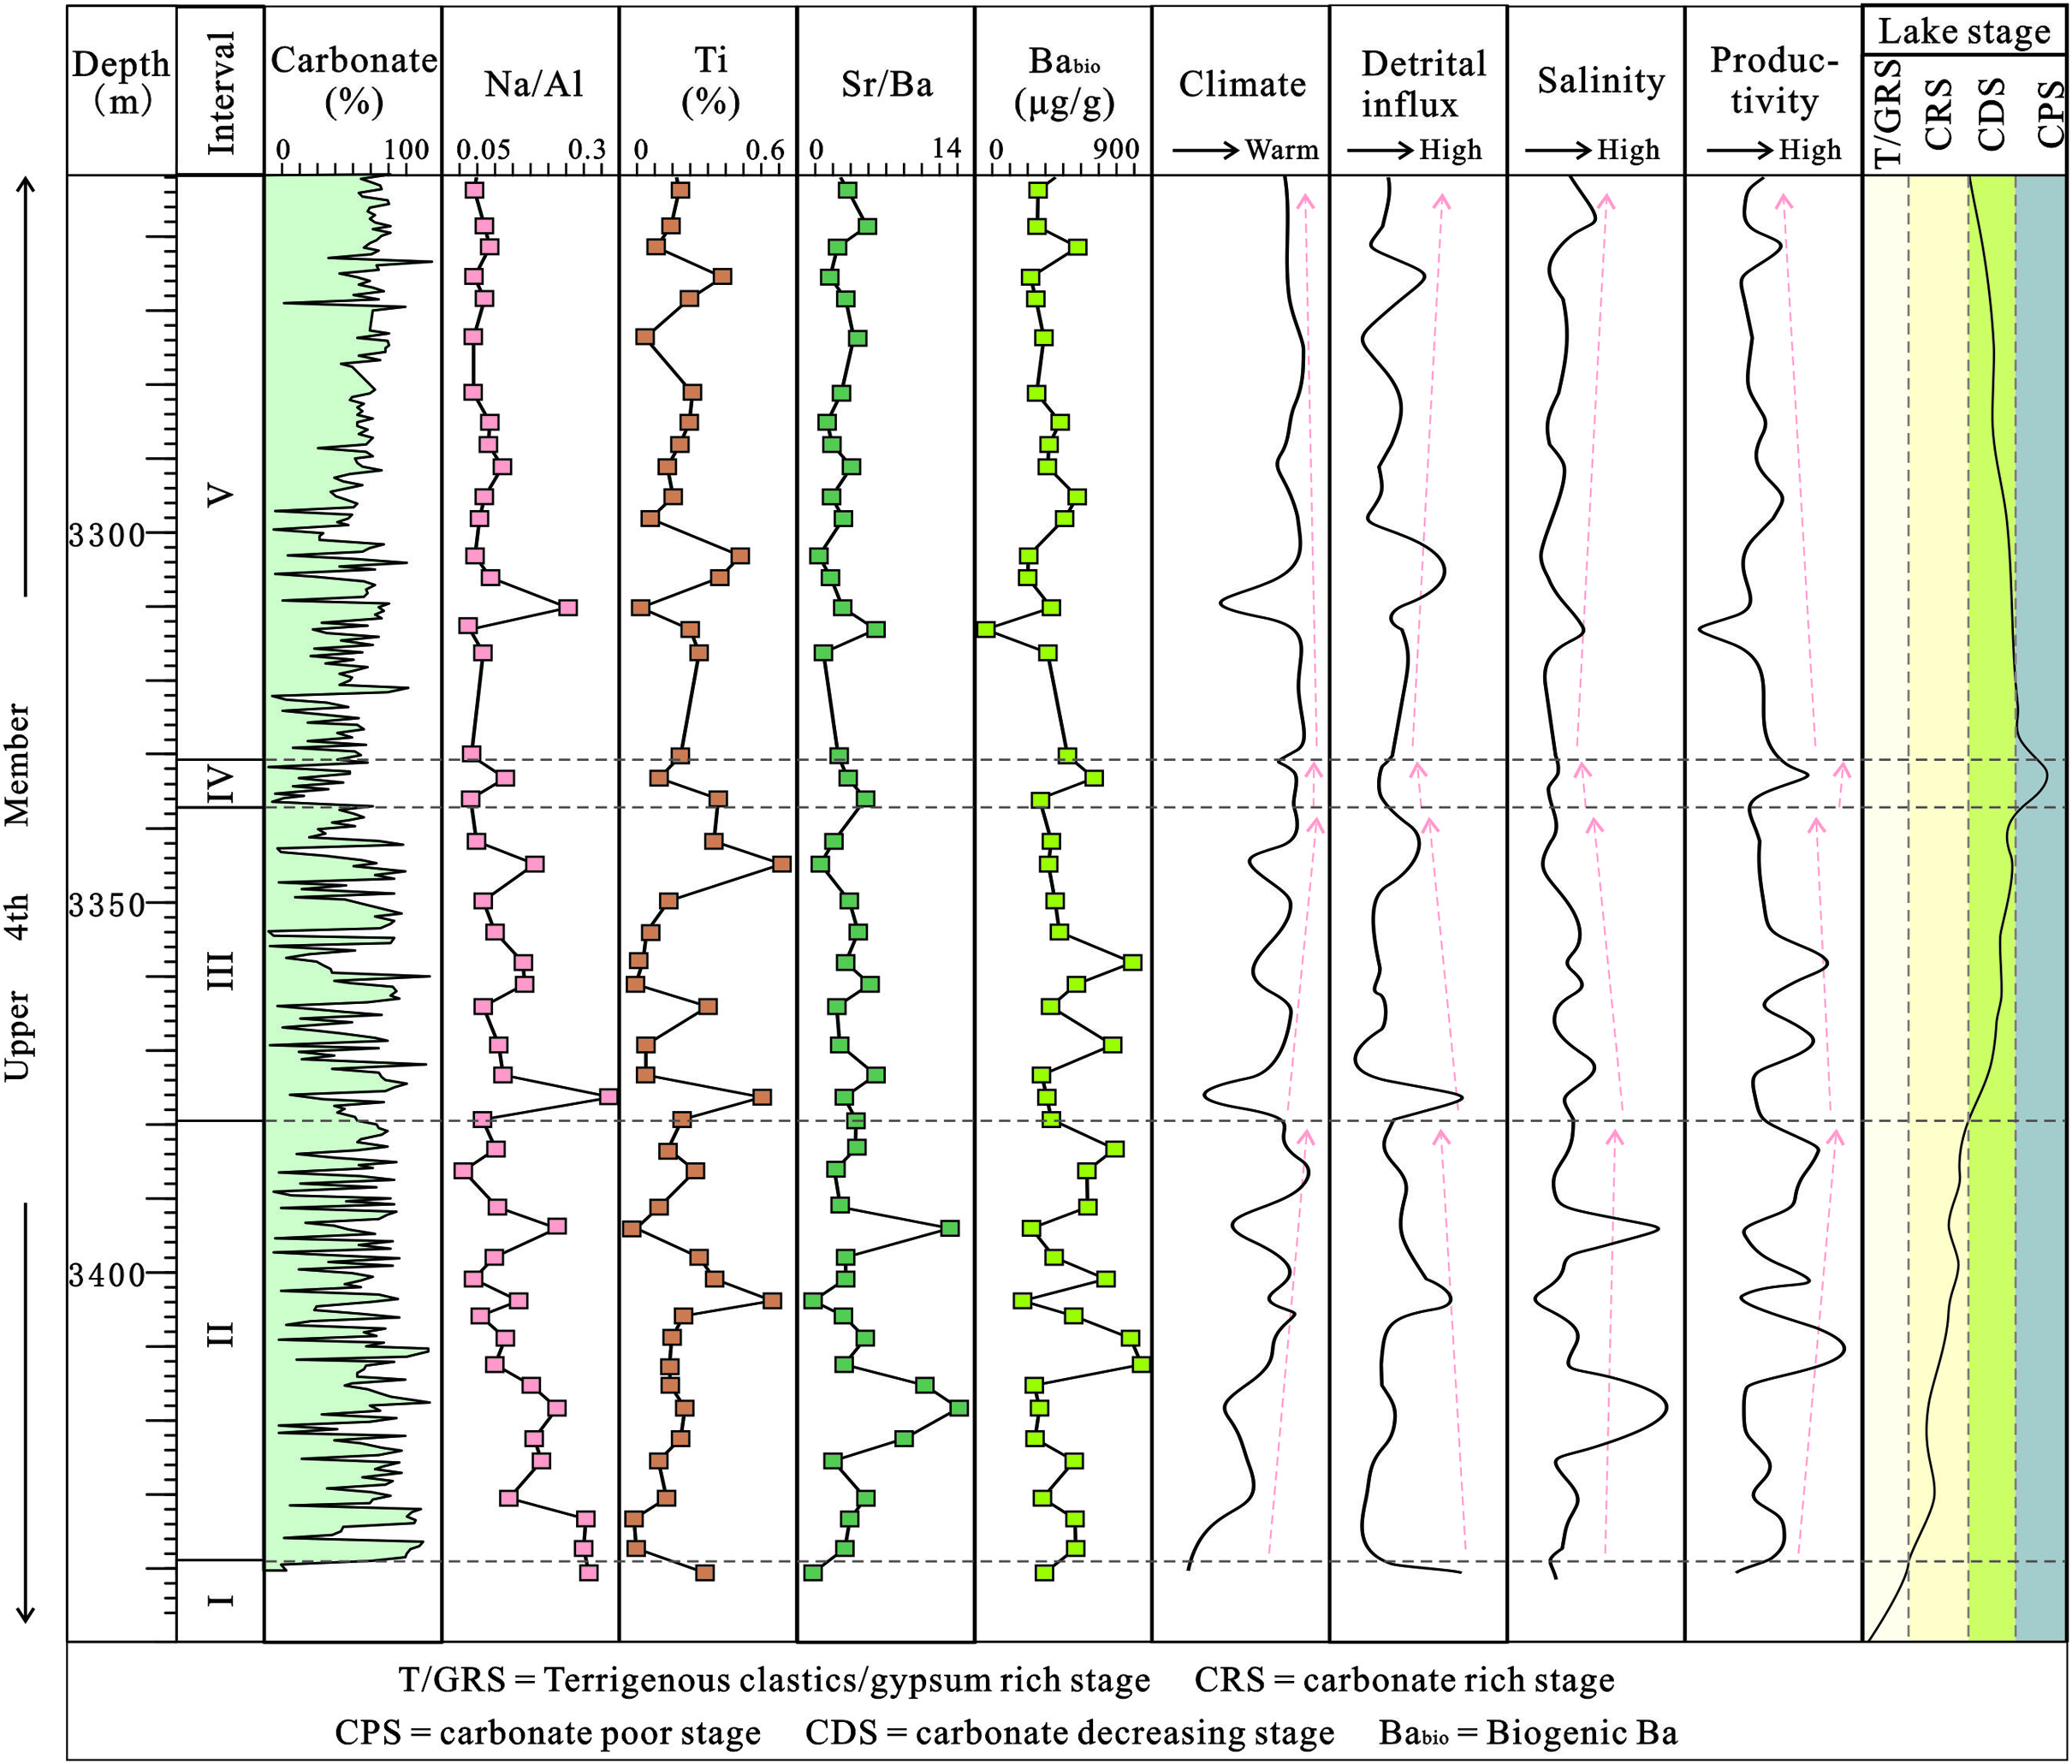 Variation of lacustrine carbonate deposition in the Eocene 